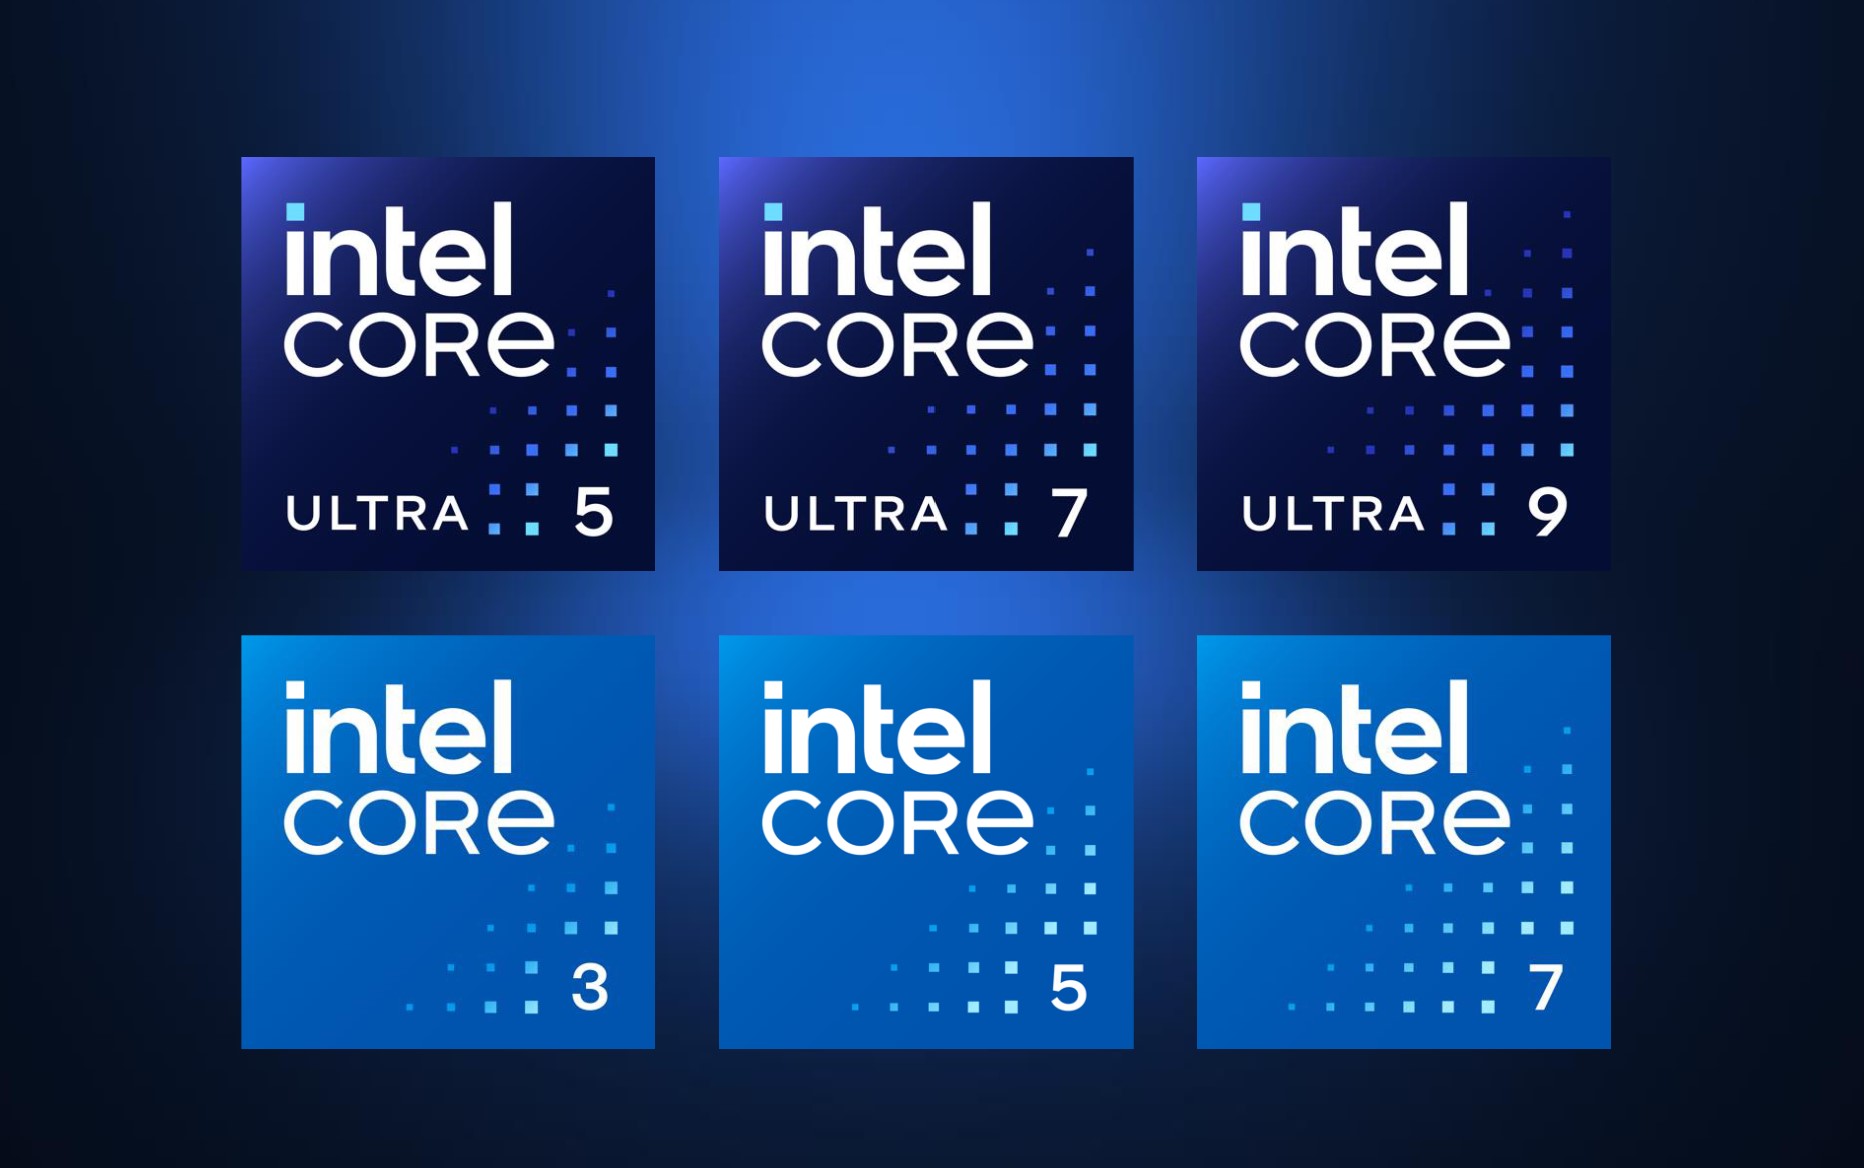 Intel Core processor branding updated